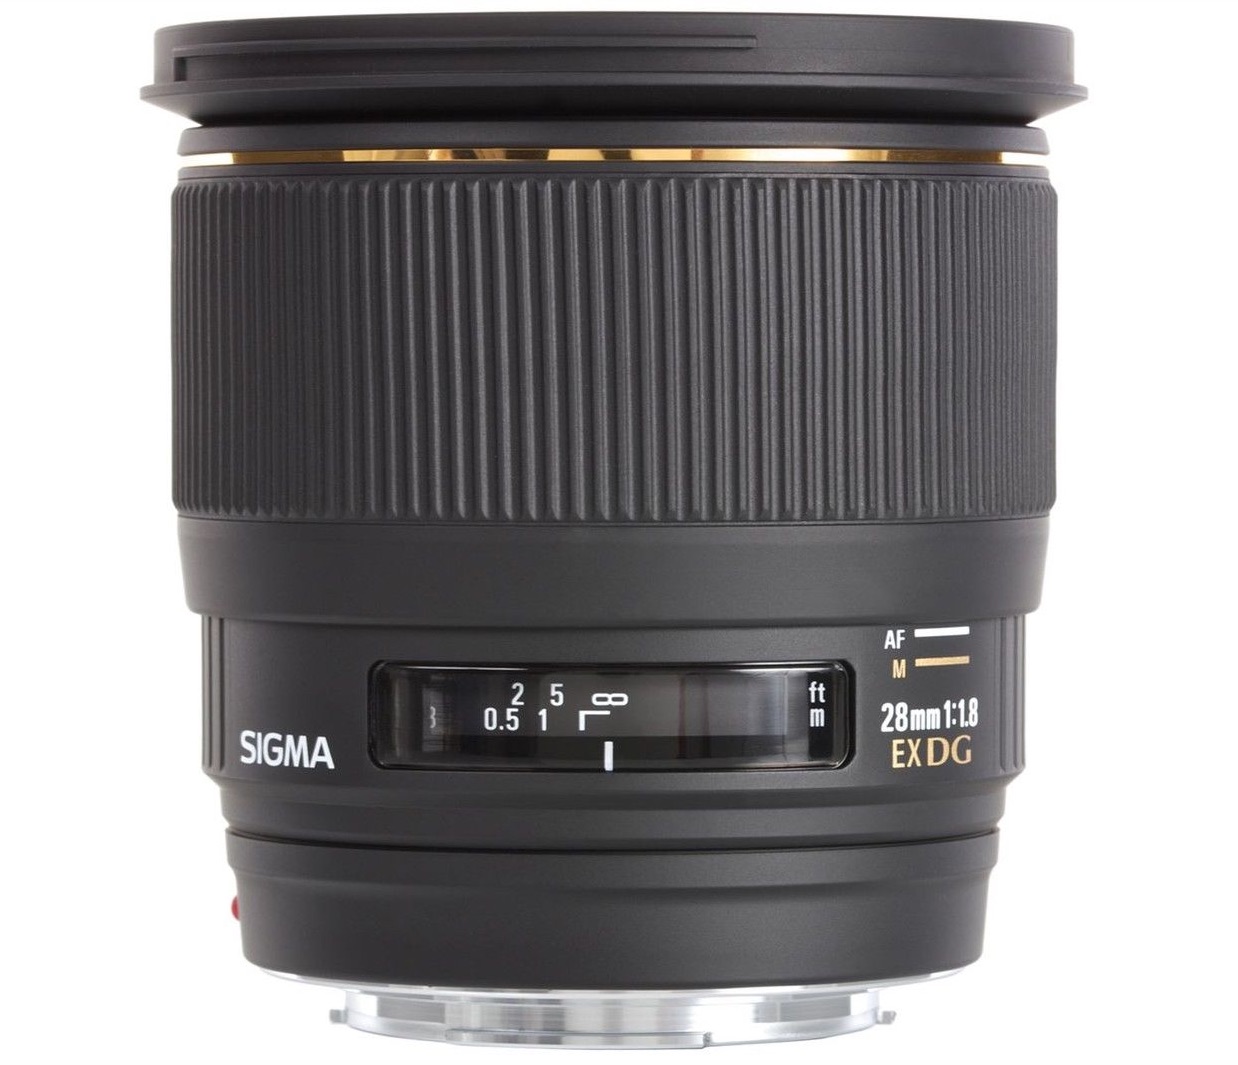 Sigma 28mm f1.8 Macro EX DG - Canon mount